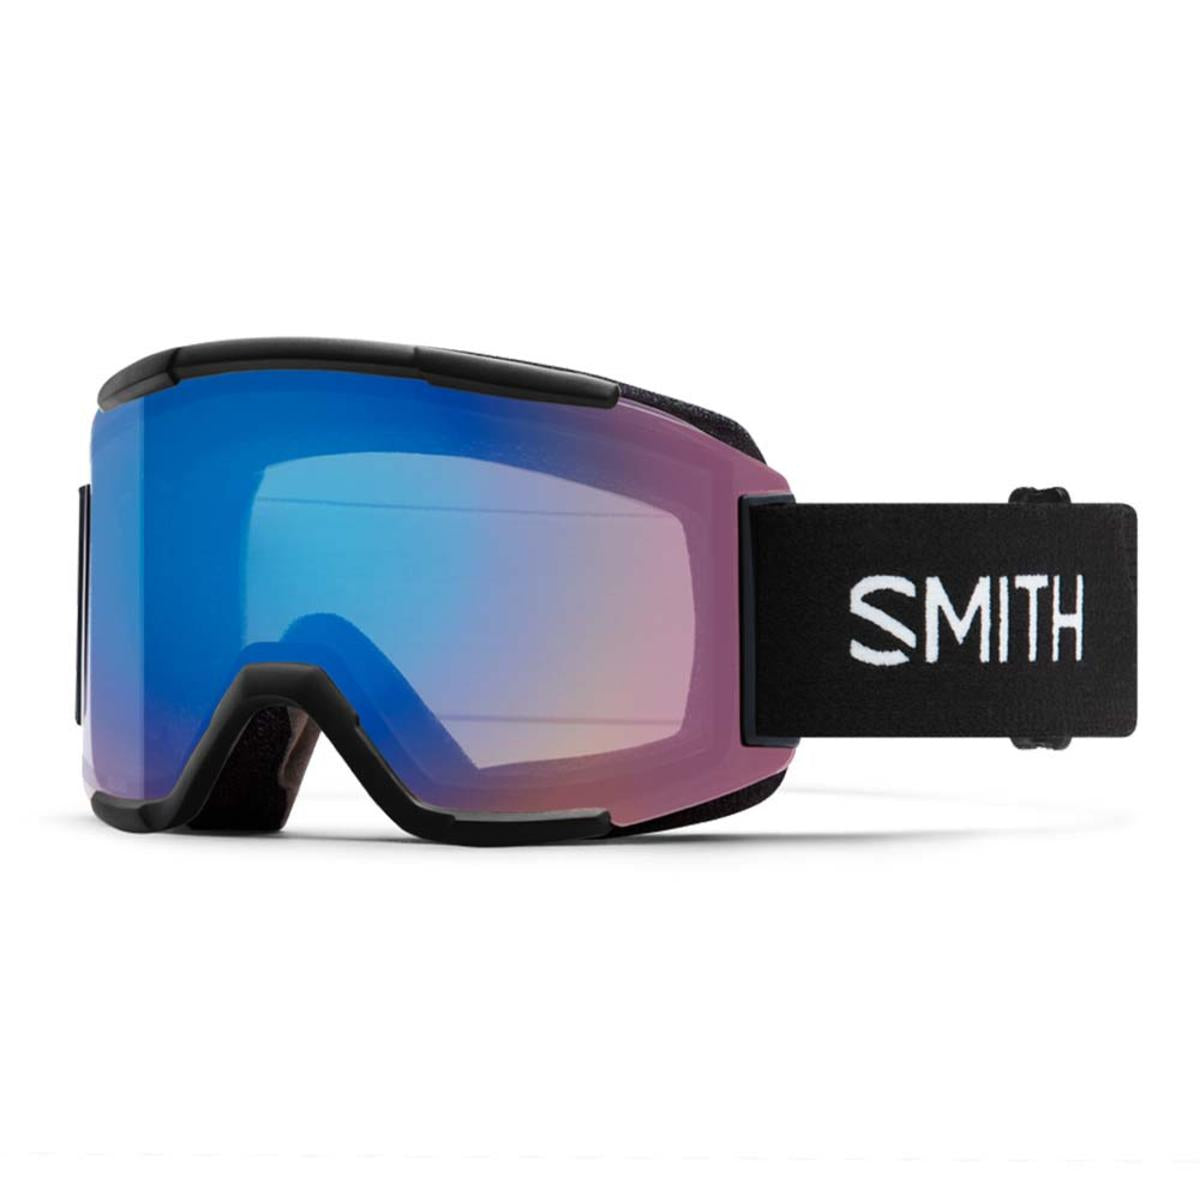 Smith Optics Squad Goggles Chromapop Storm Rose Flash - Black Frame